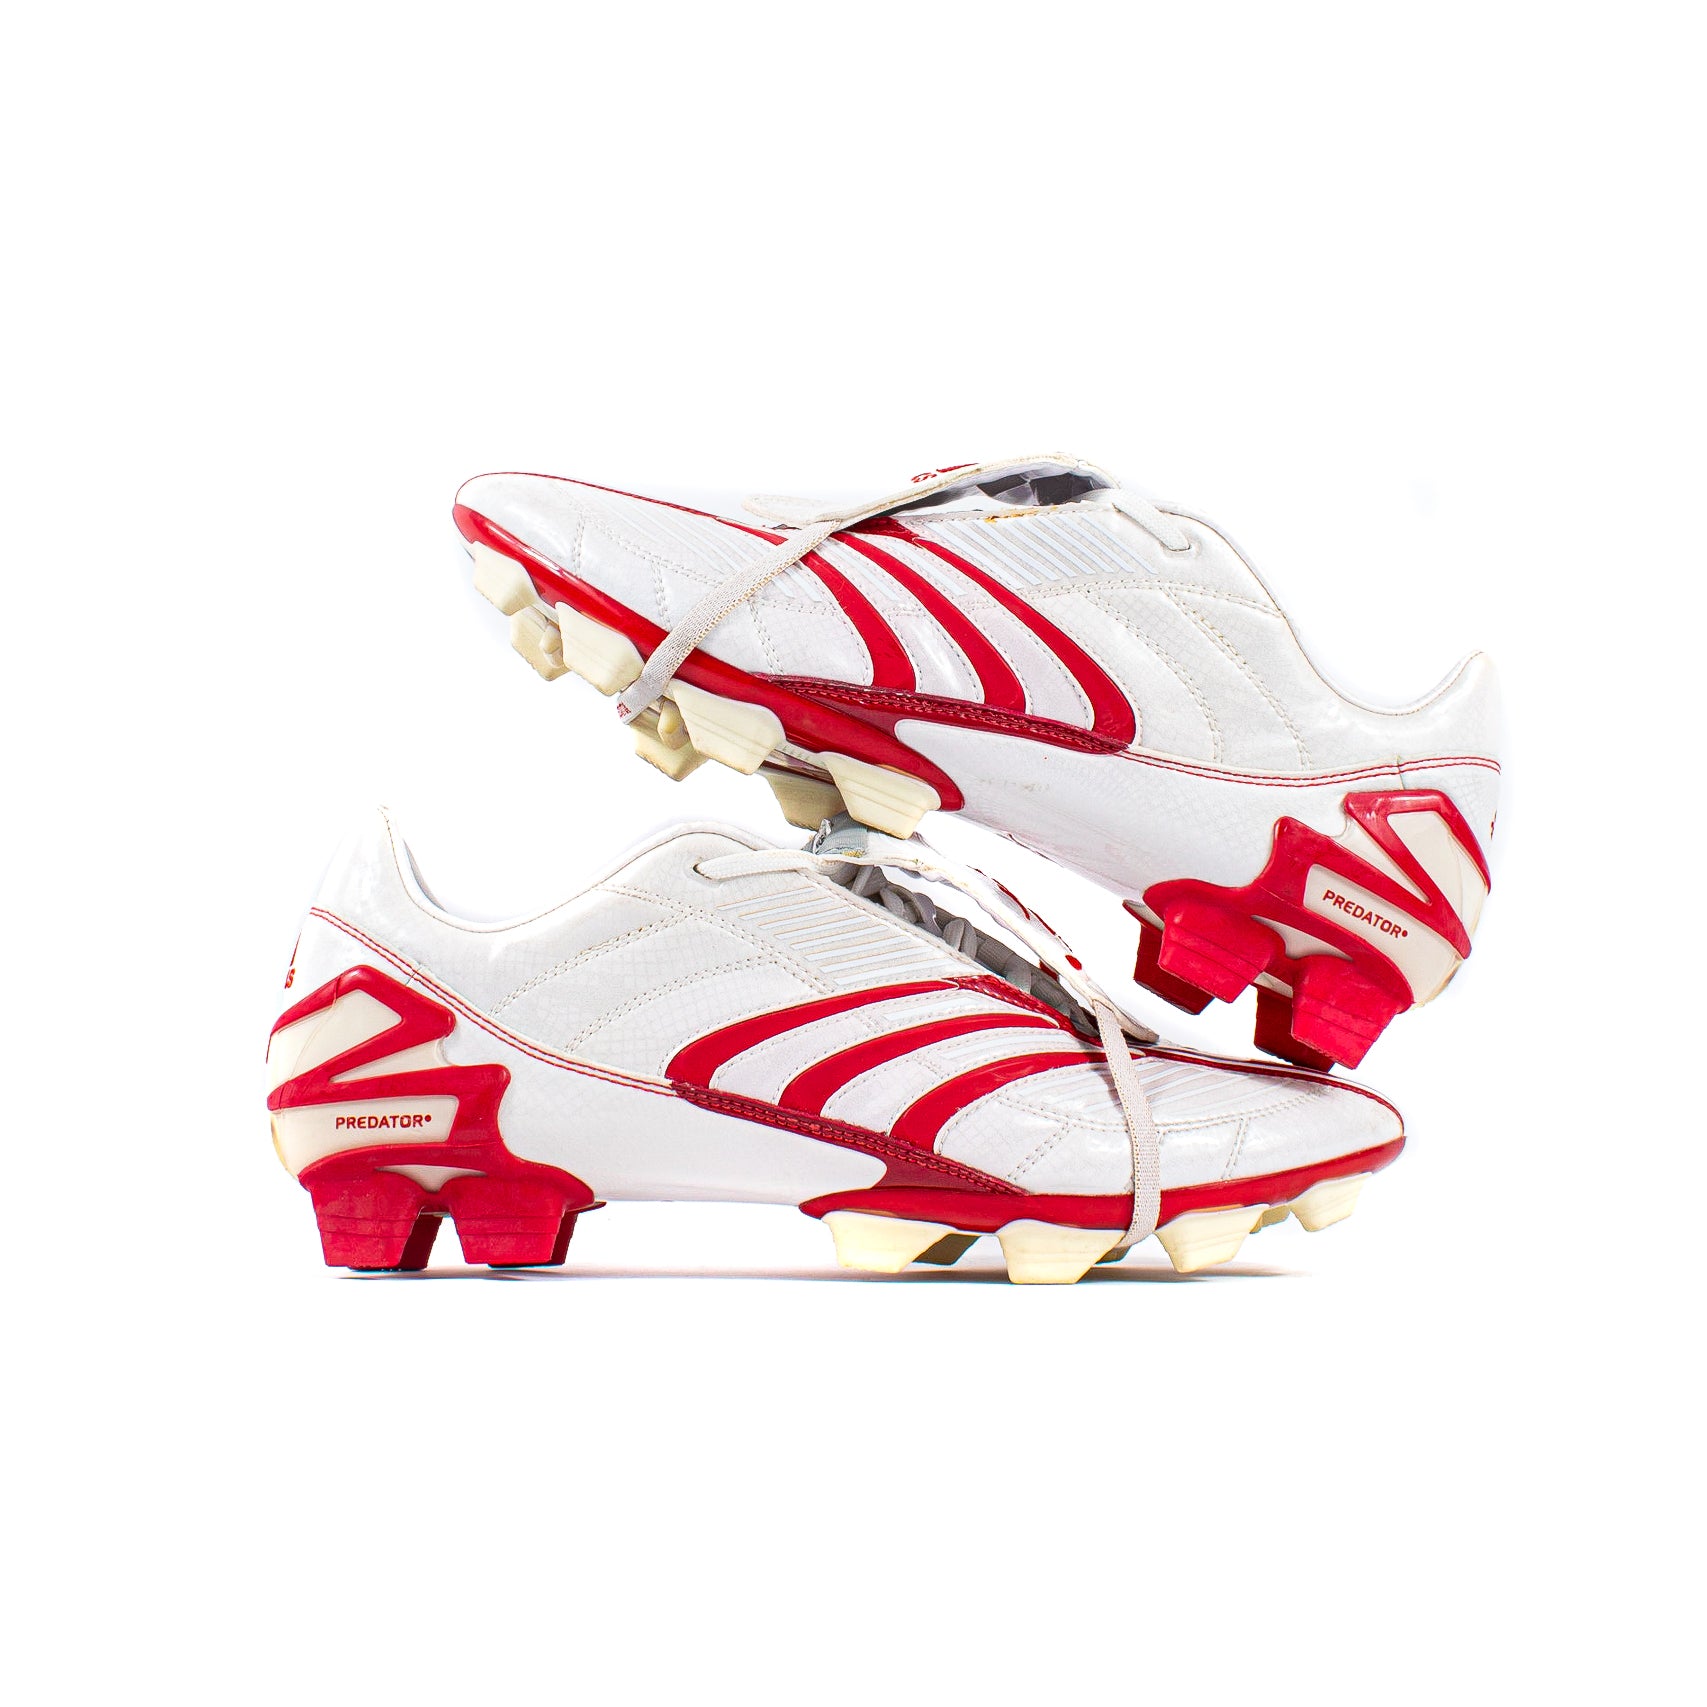 Boquilla industria chico Adidas Predator Absolute White Red DB FG – Classic Soccer Cleats